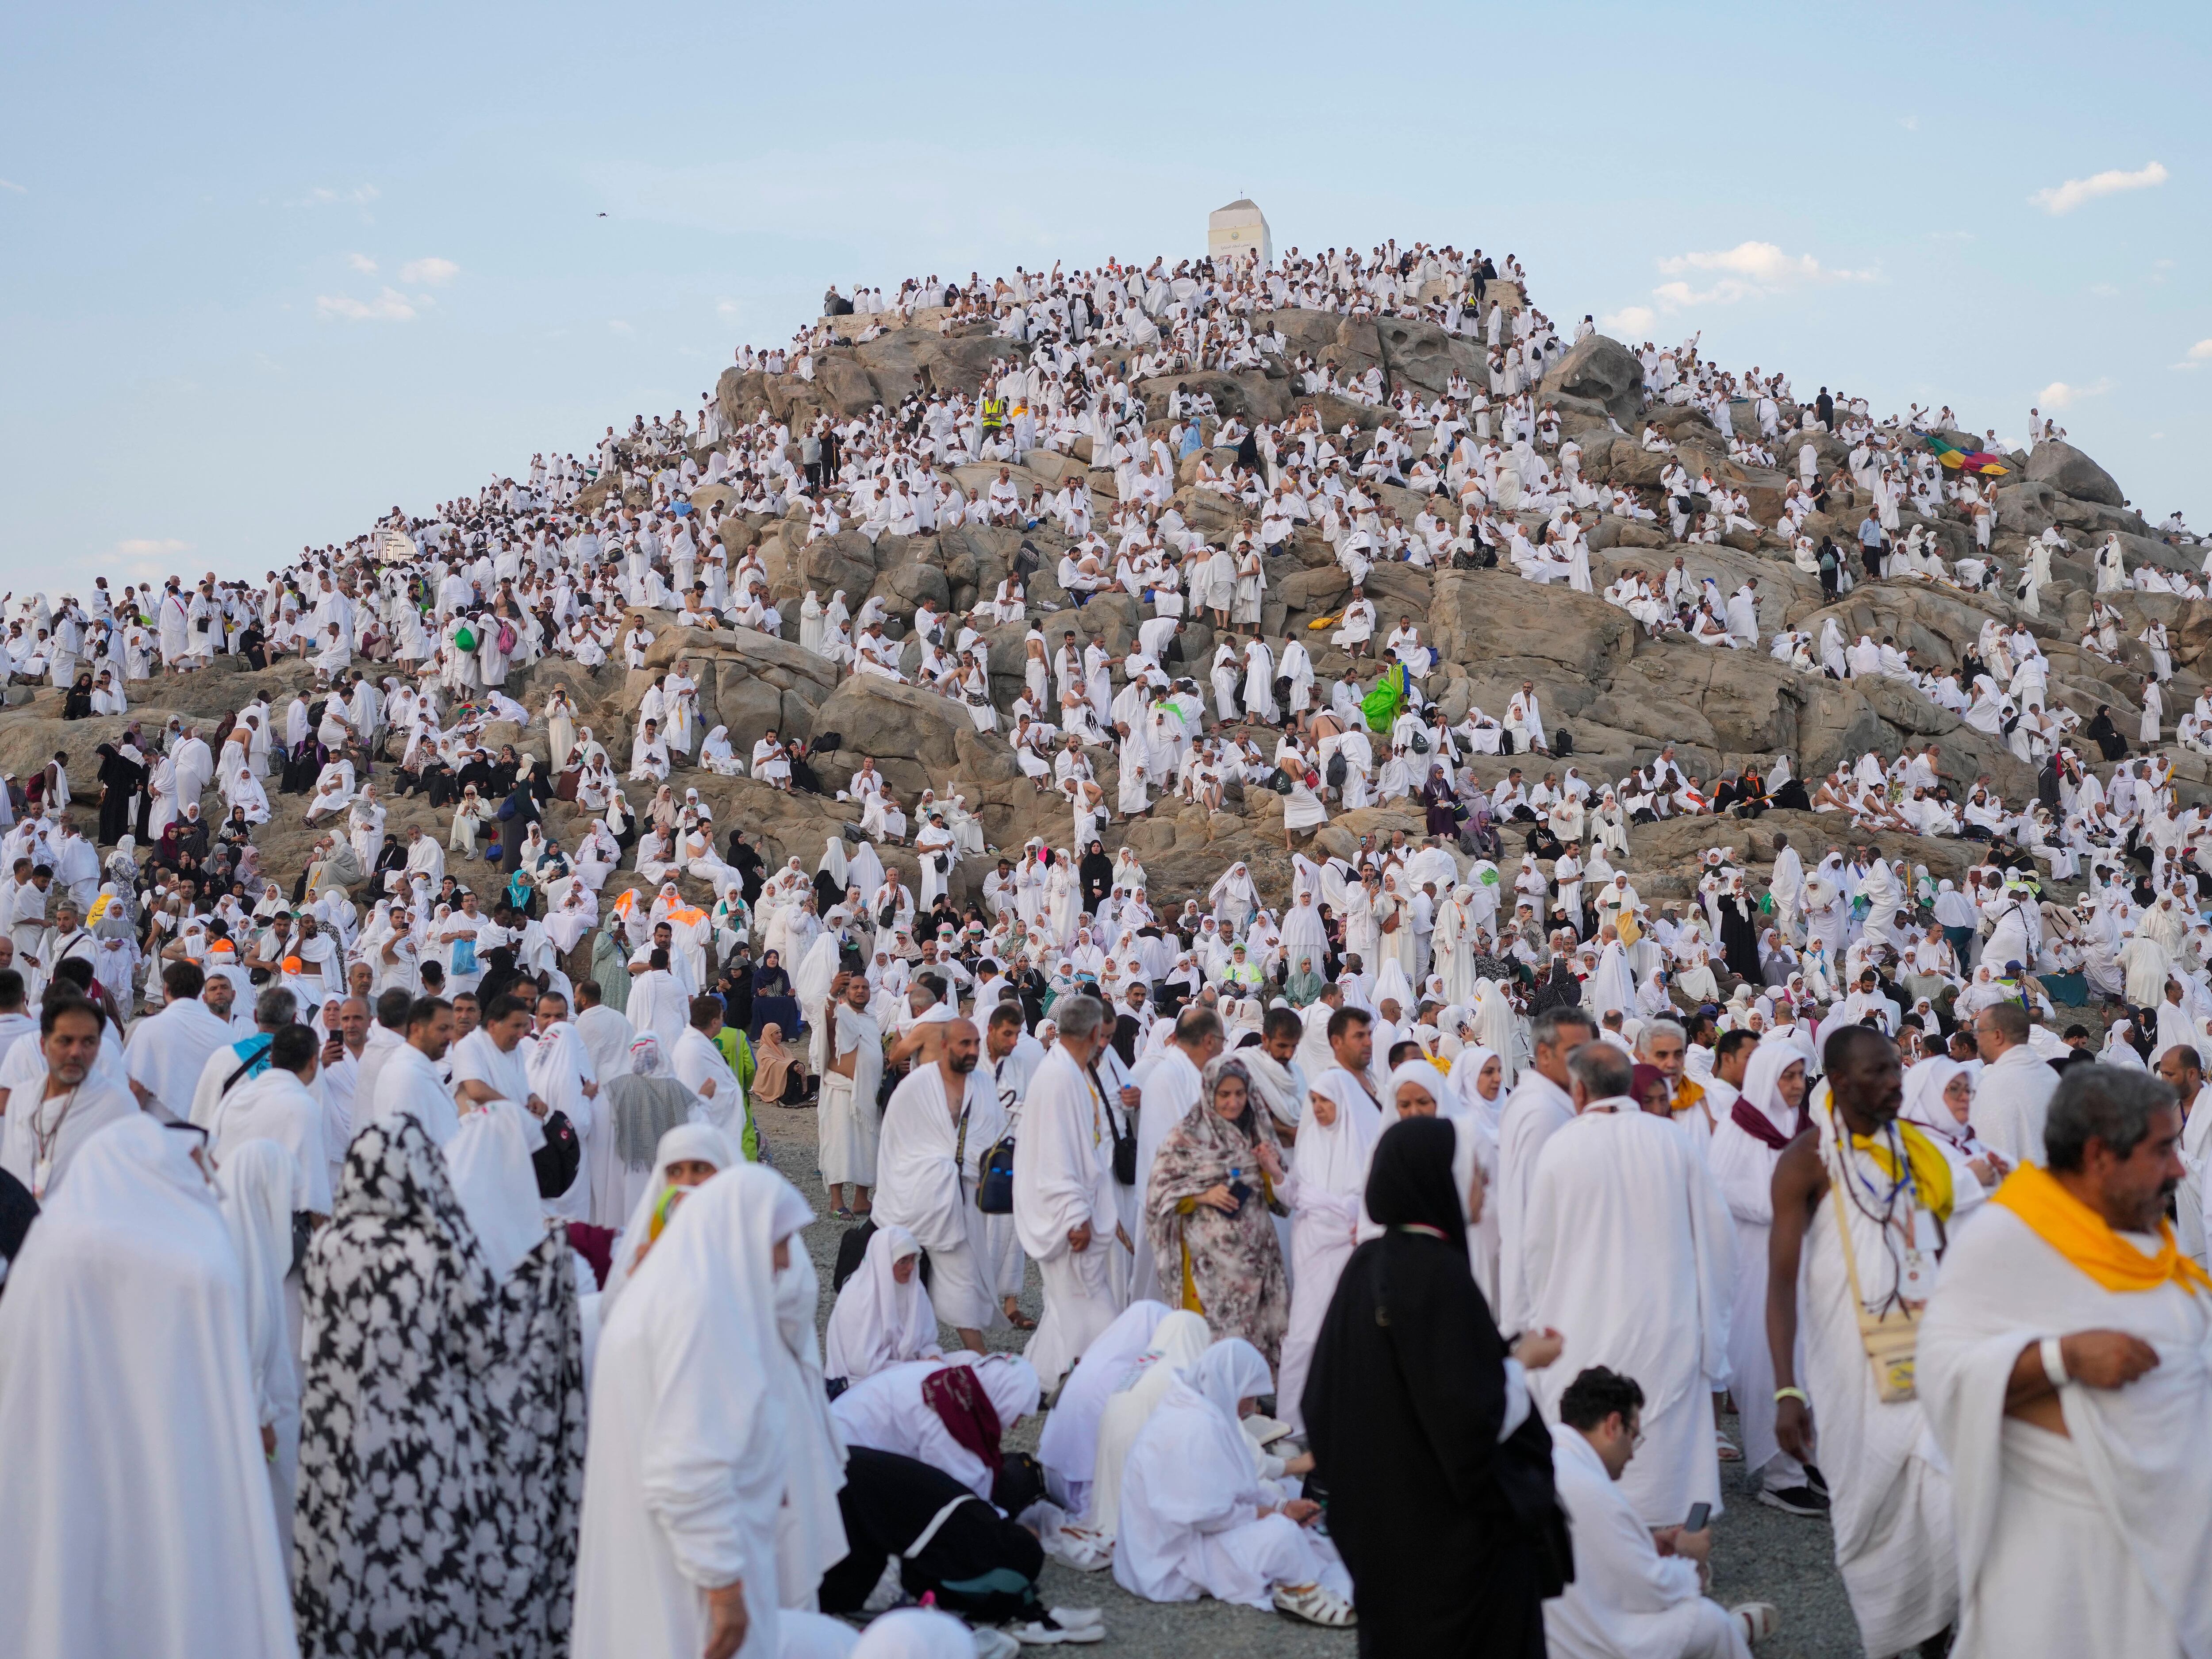 Muslim pilgrims converge at Mount Arafat for worship as Hajj reaches its peak